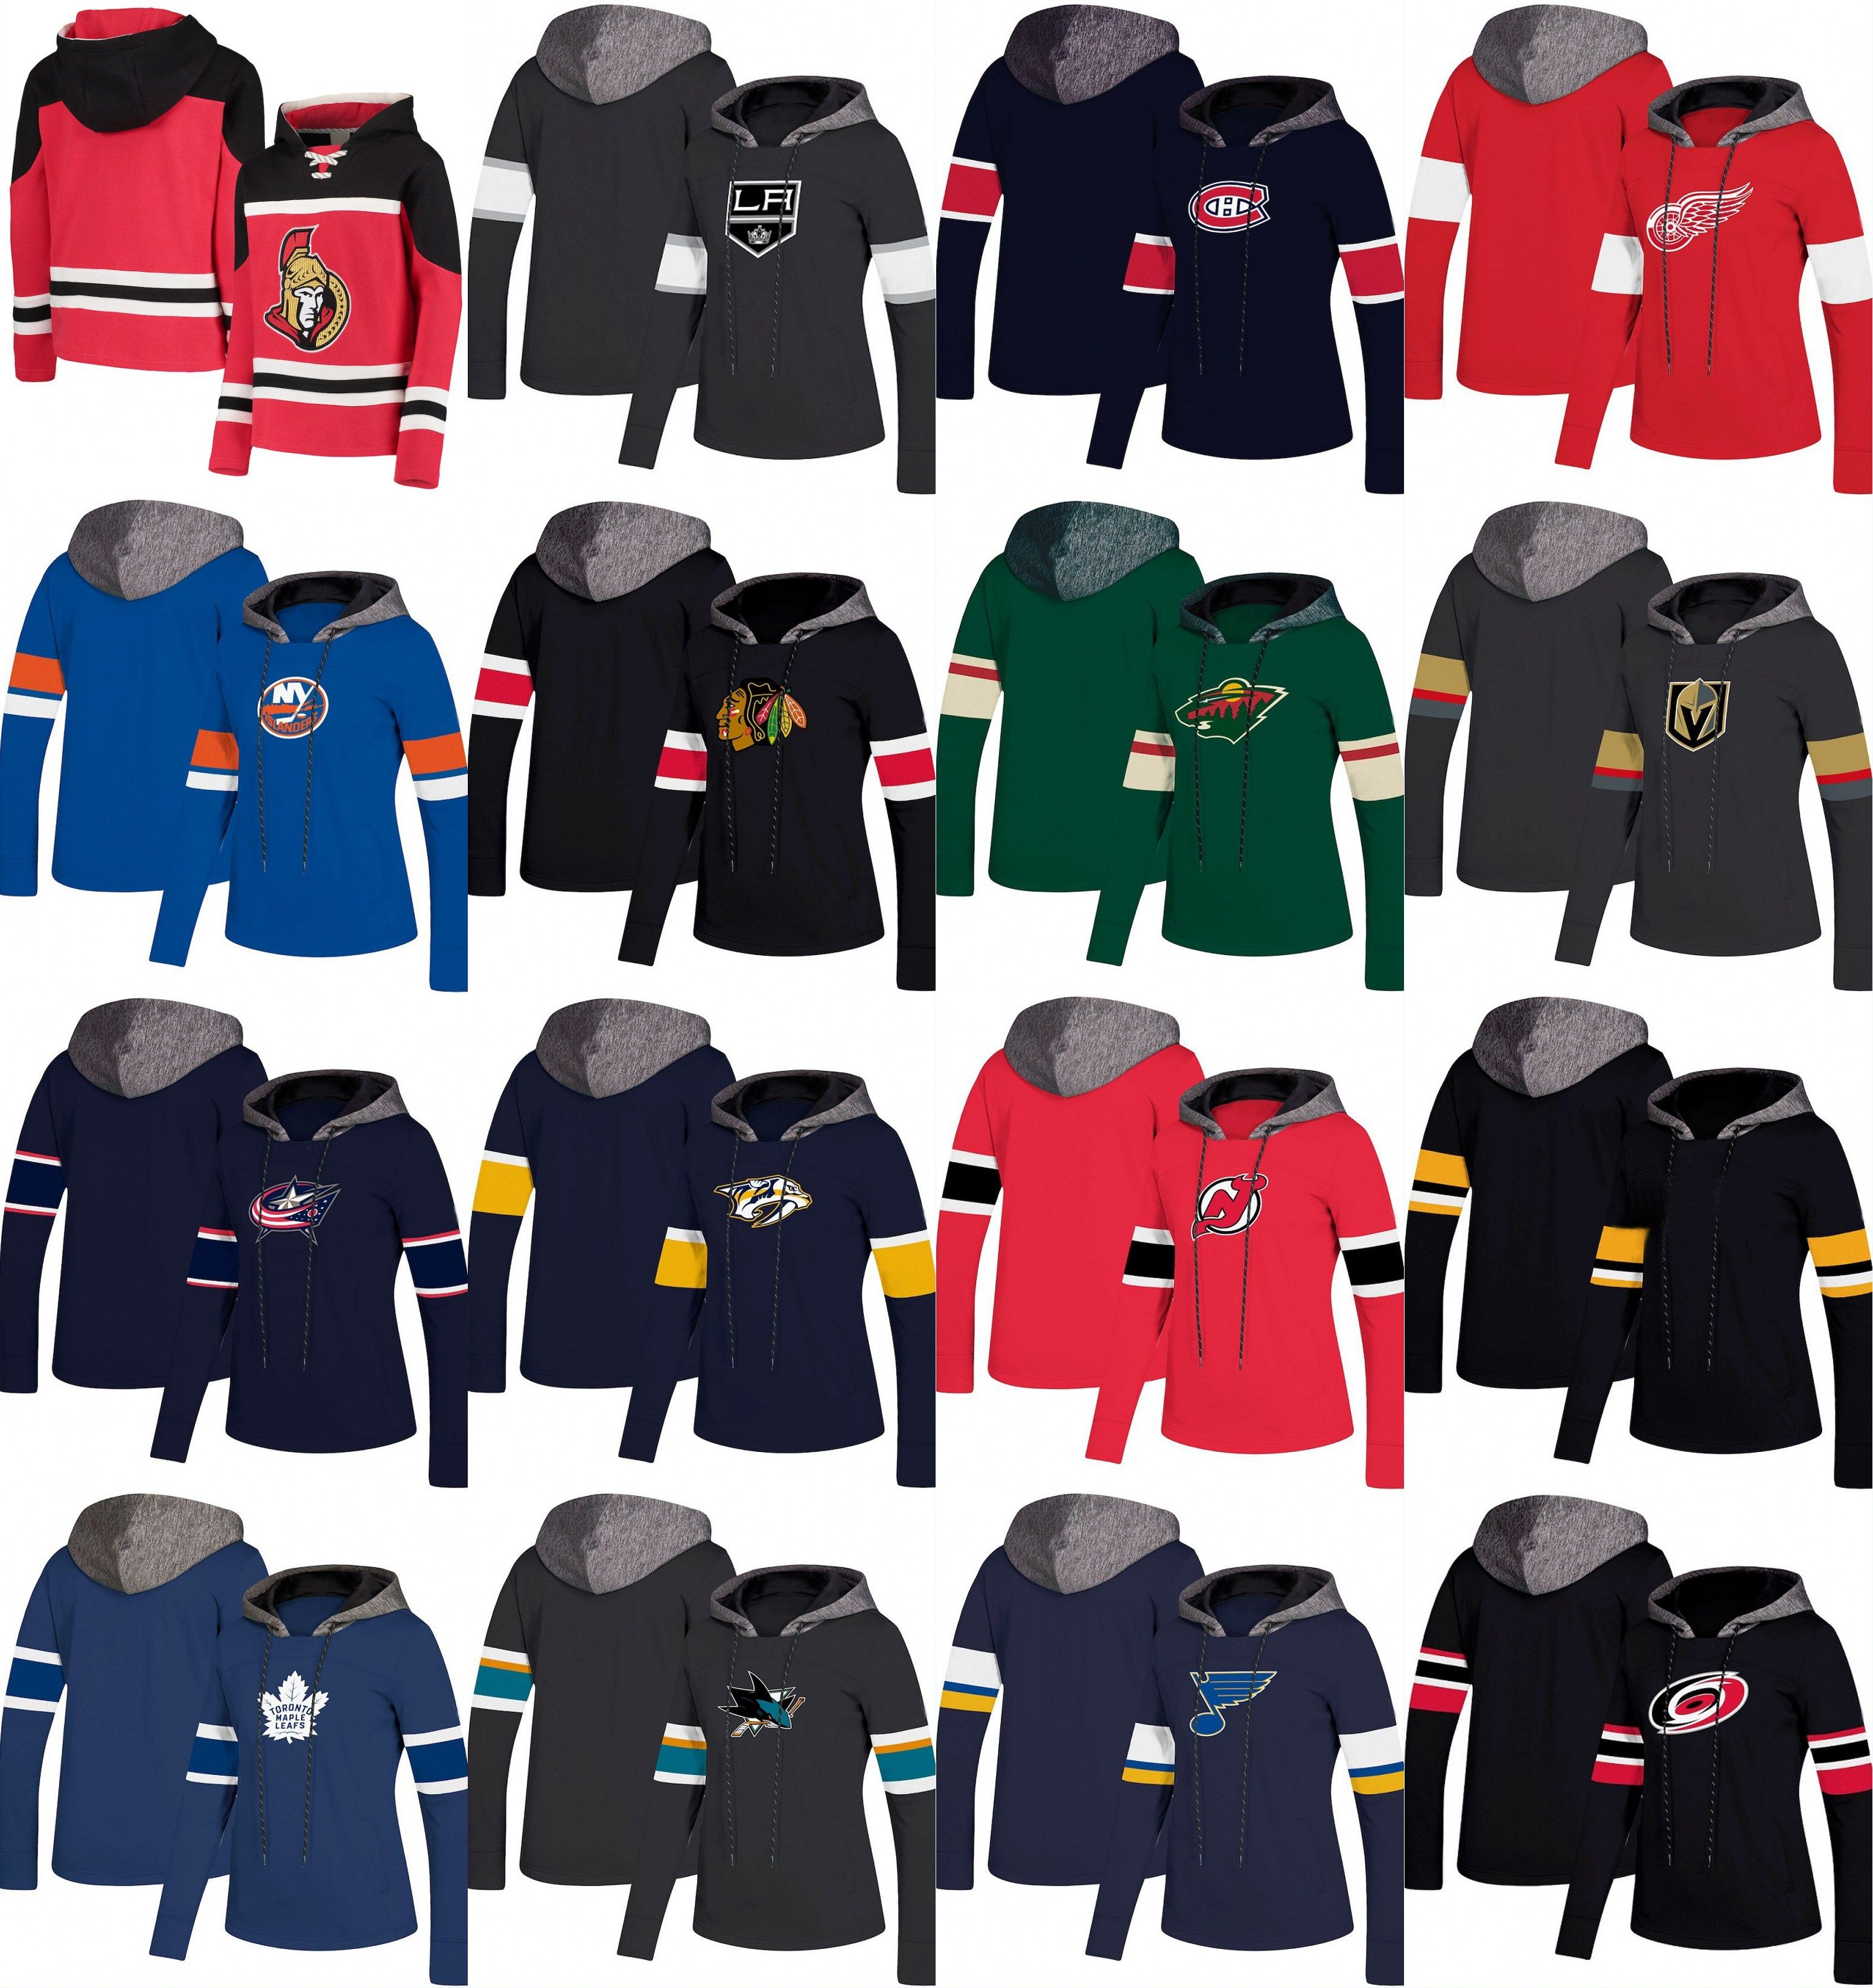 hockey jerseys for sale in toronto